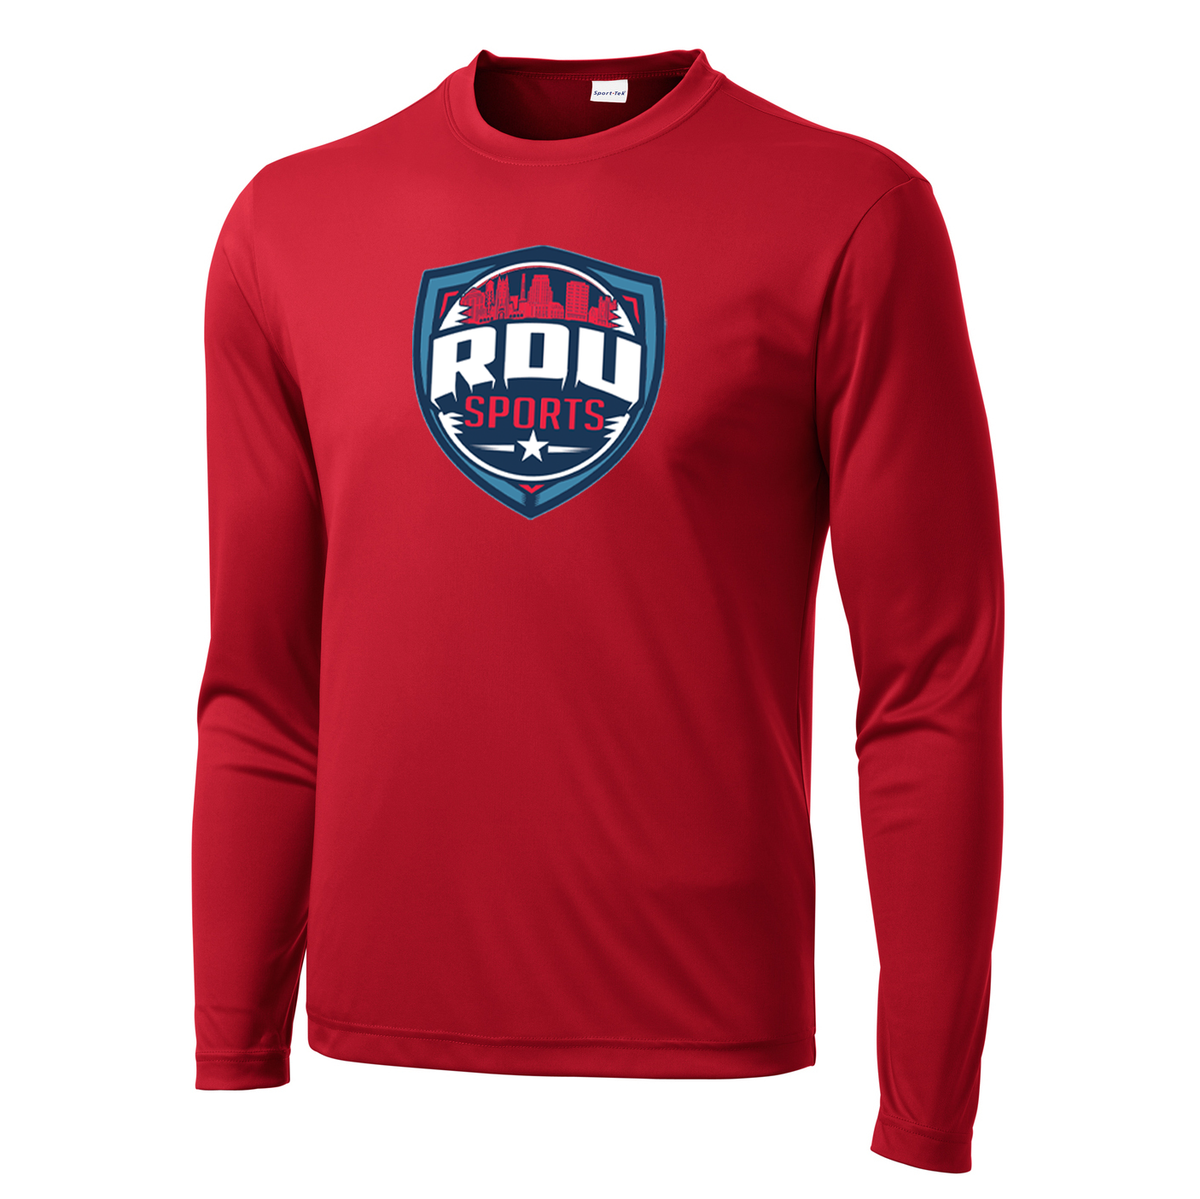 RDU Sports Long Sleeve Performance Shirt